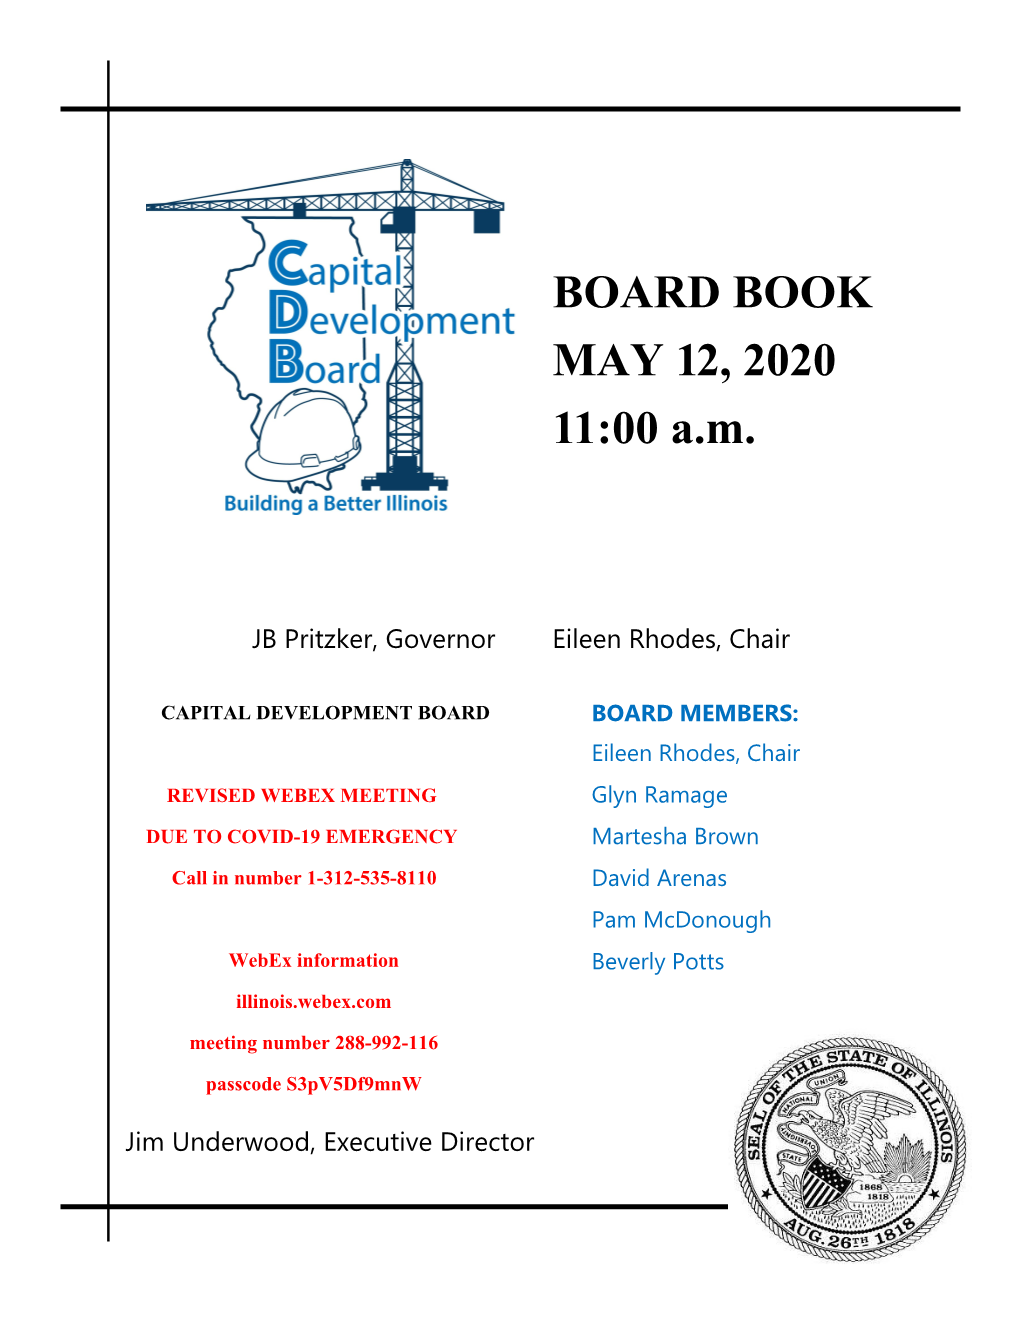 BOARD BOOK MAY 12, 2020 11:00 A.M